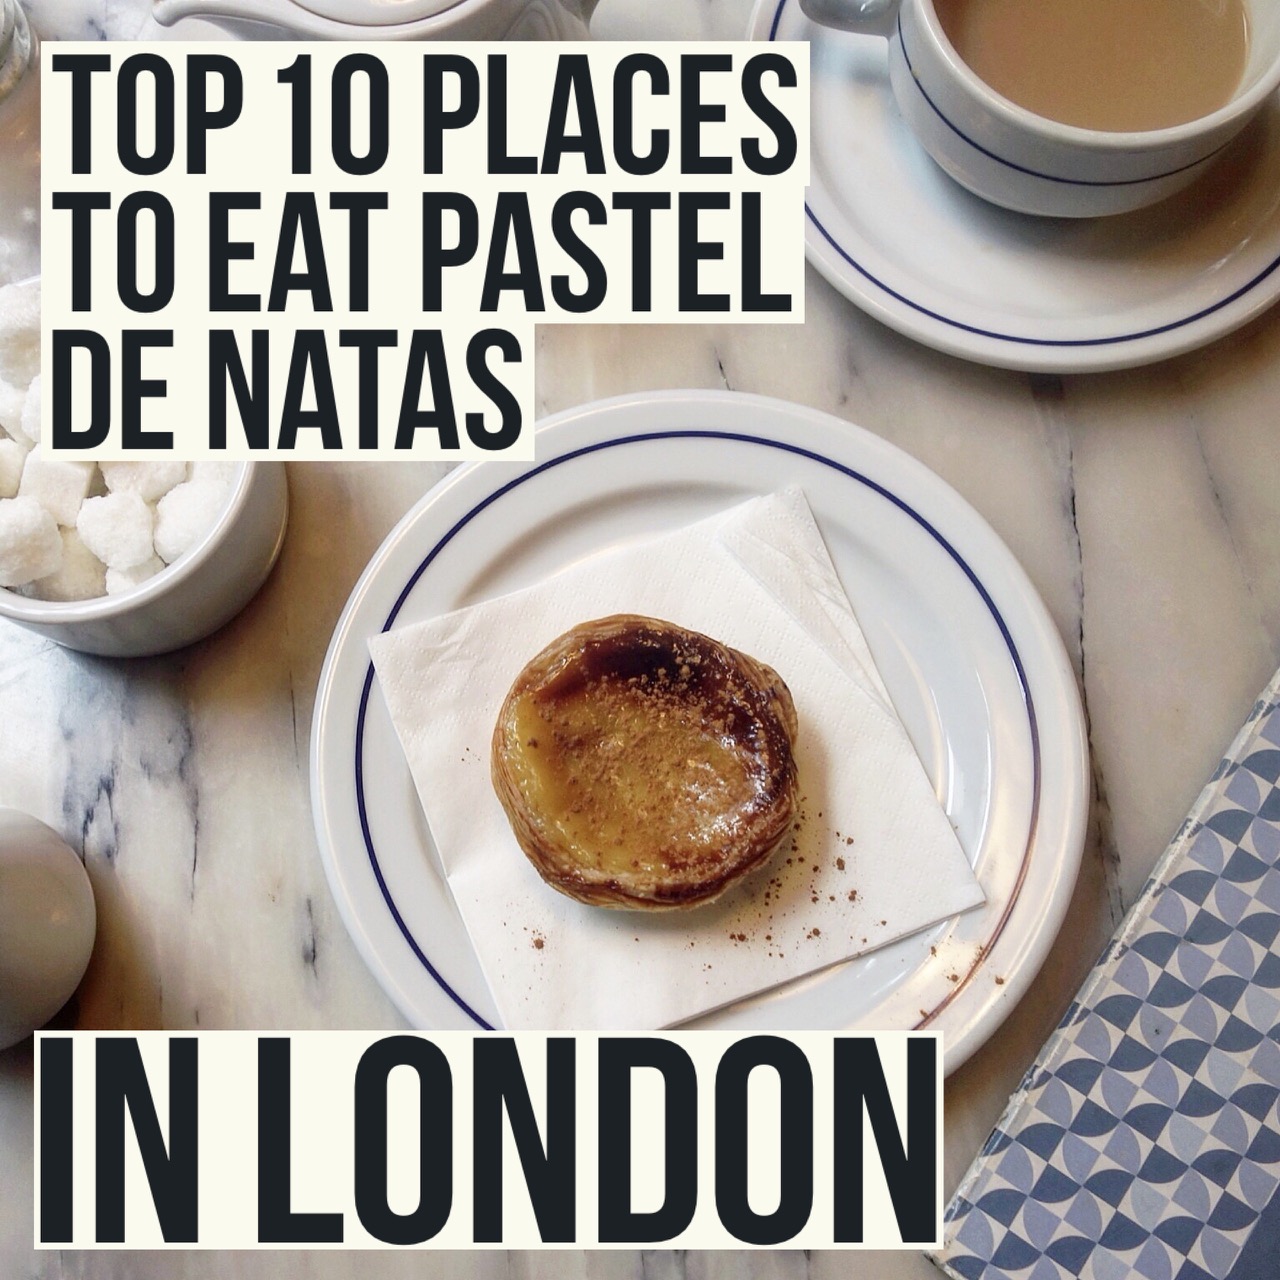 Top 10 Places to Eat Pastel de Natas in London